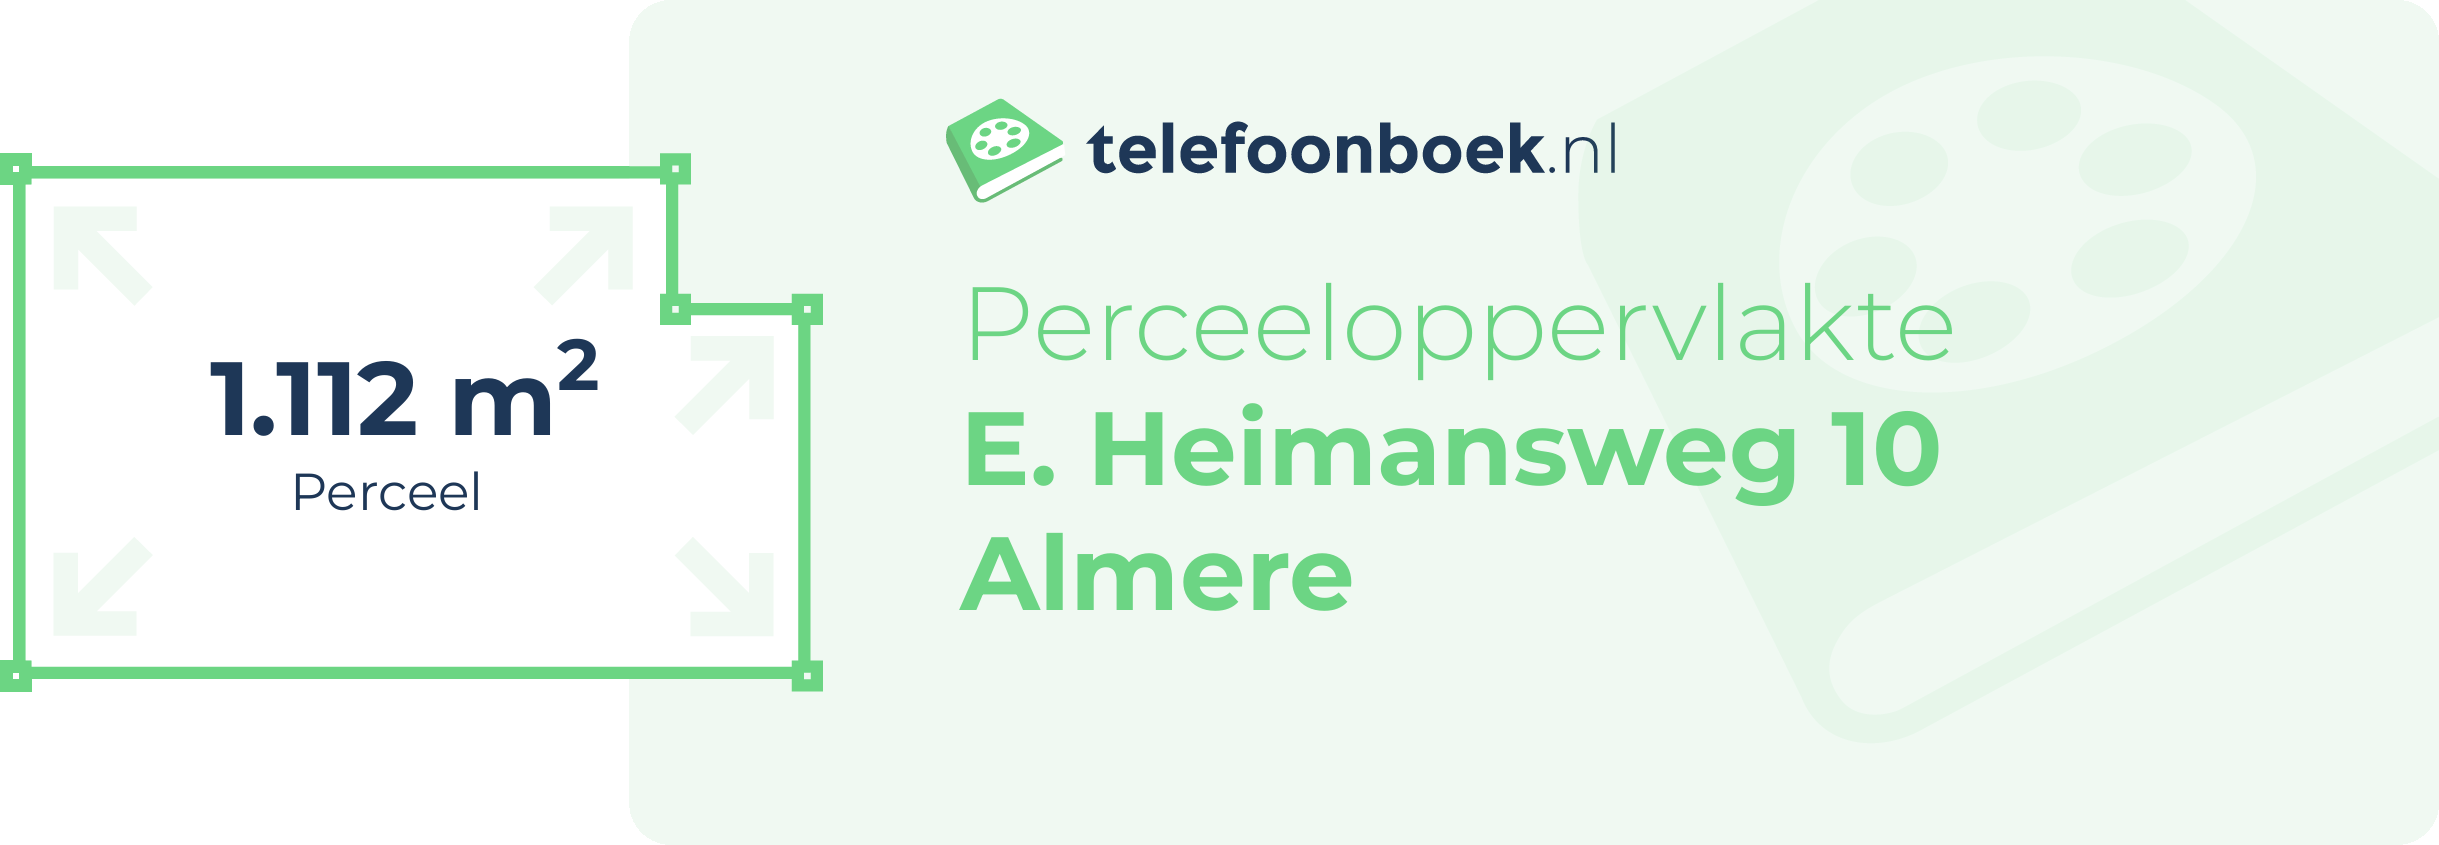 Perceeloppervlakte E. Heimansweg 10 Almere